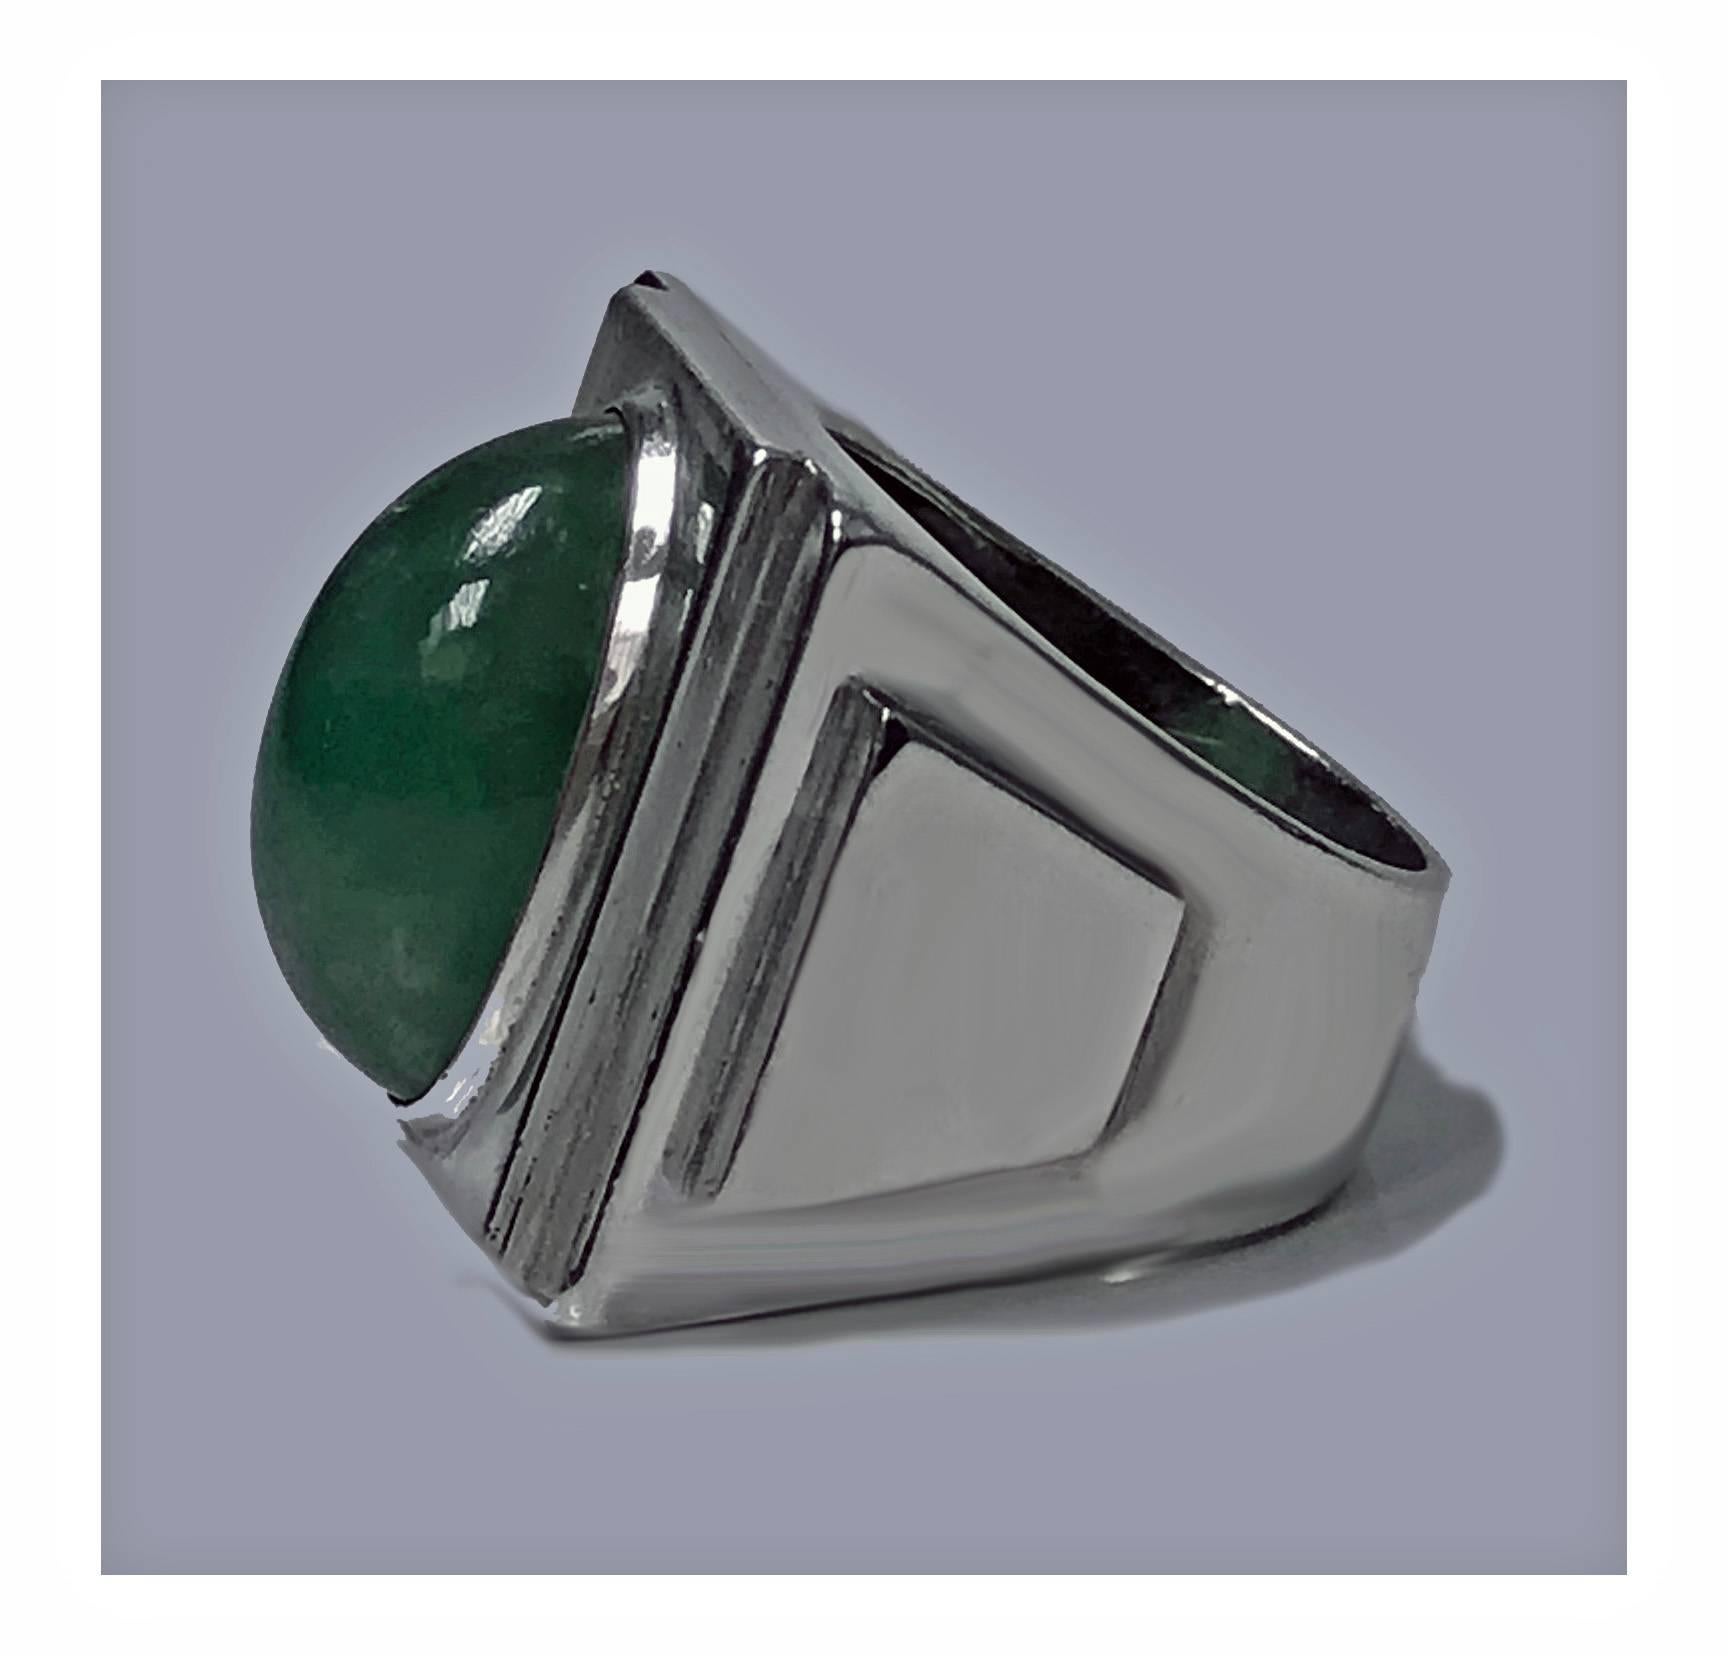 Silver Bold Striking Art Deco Architectural Design Ring, French Import Mark, circa 1920